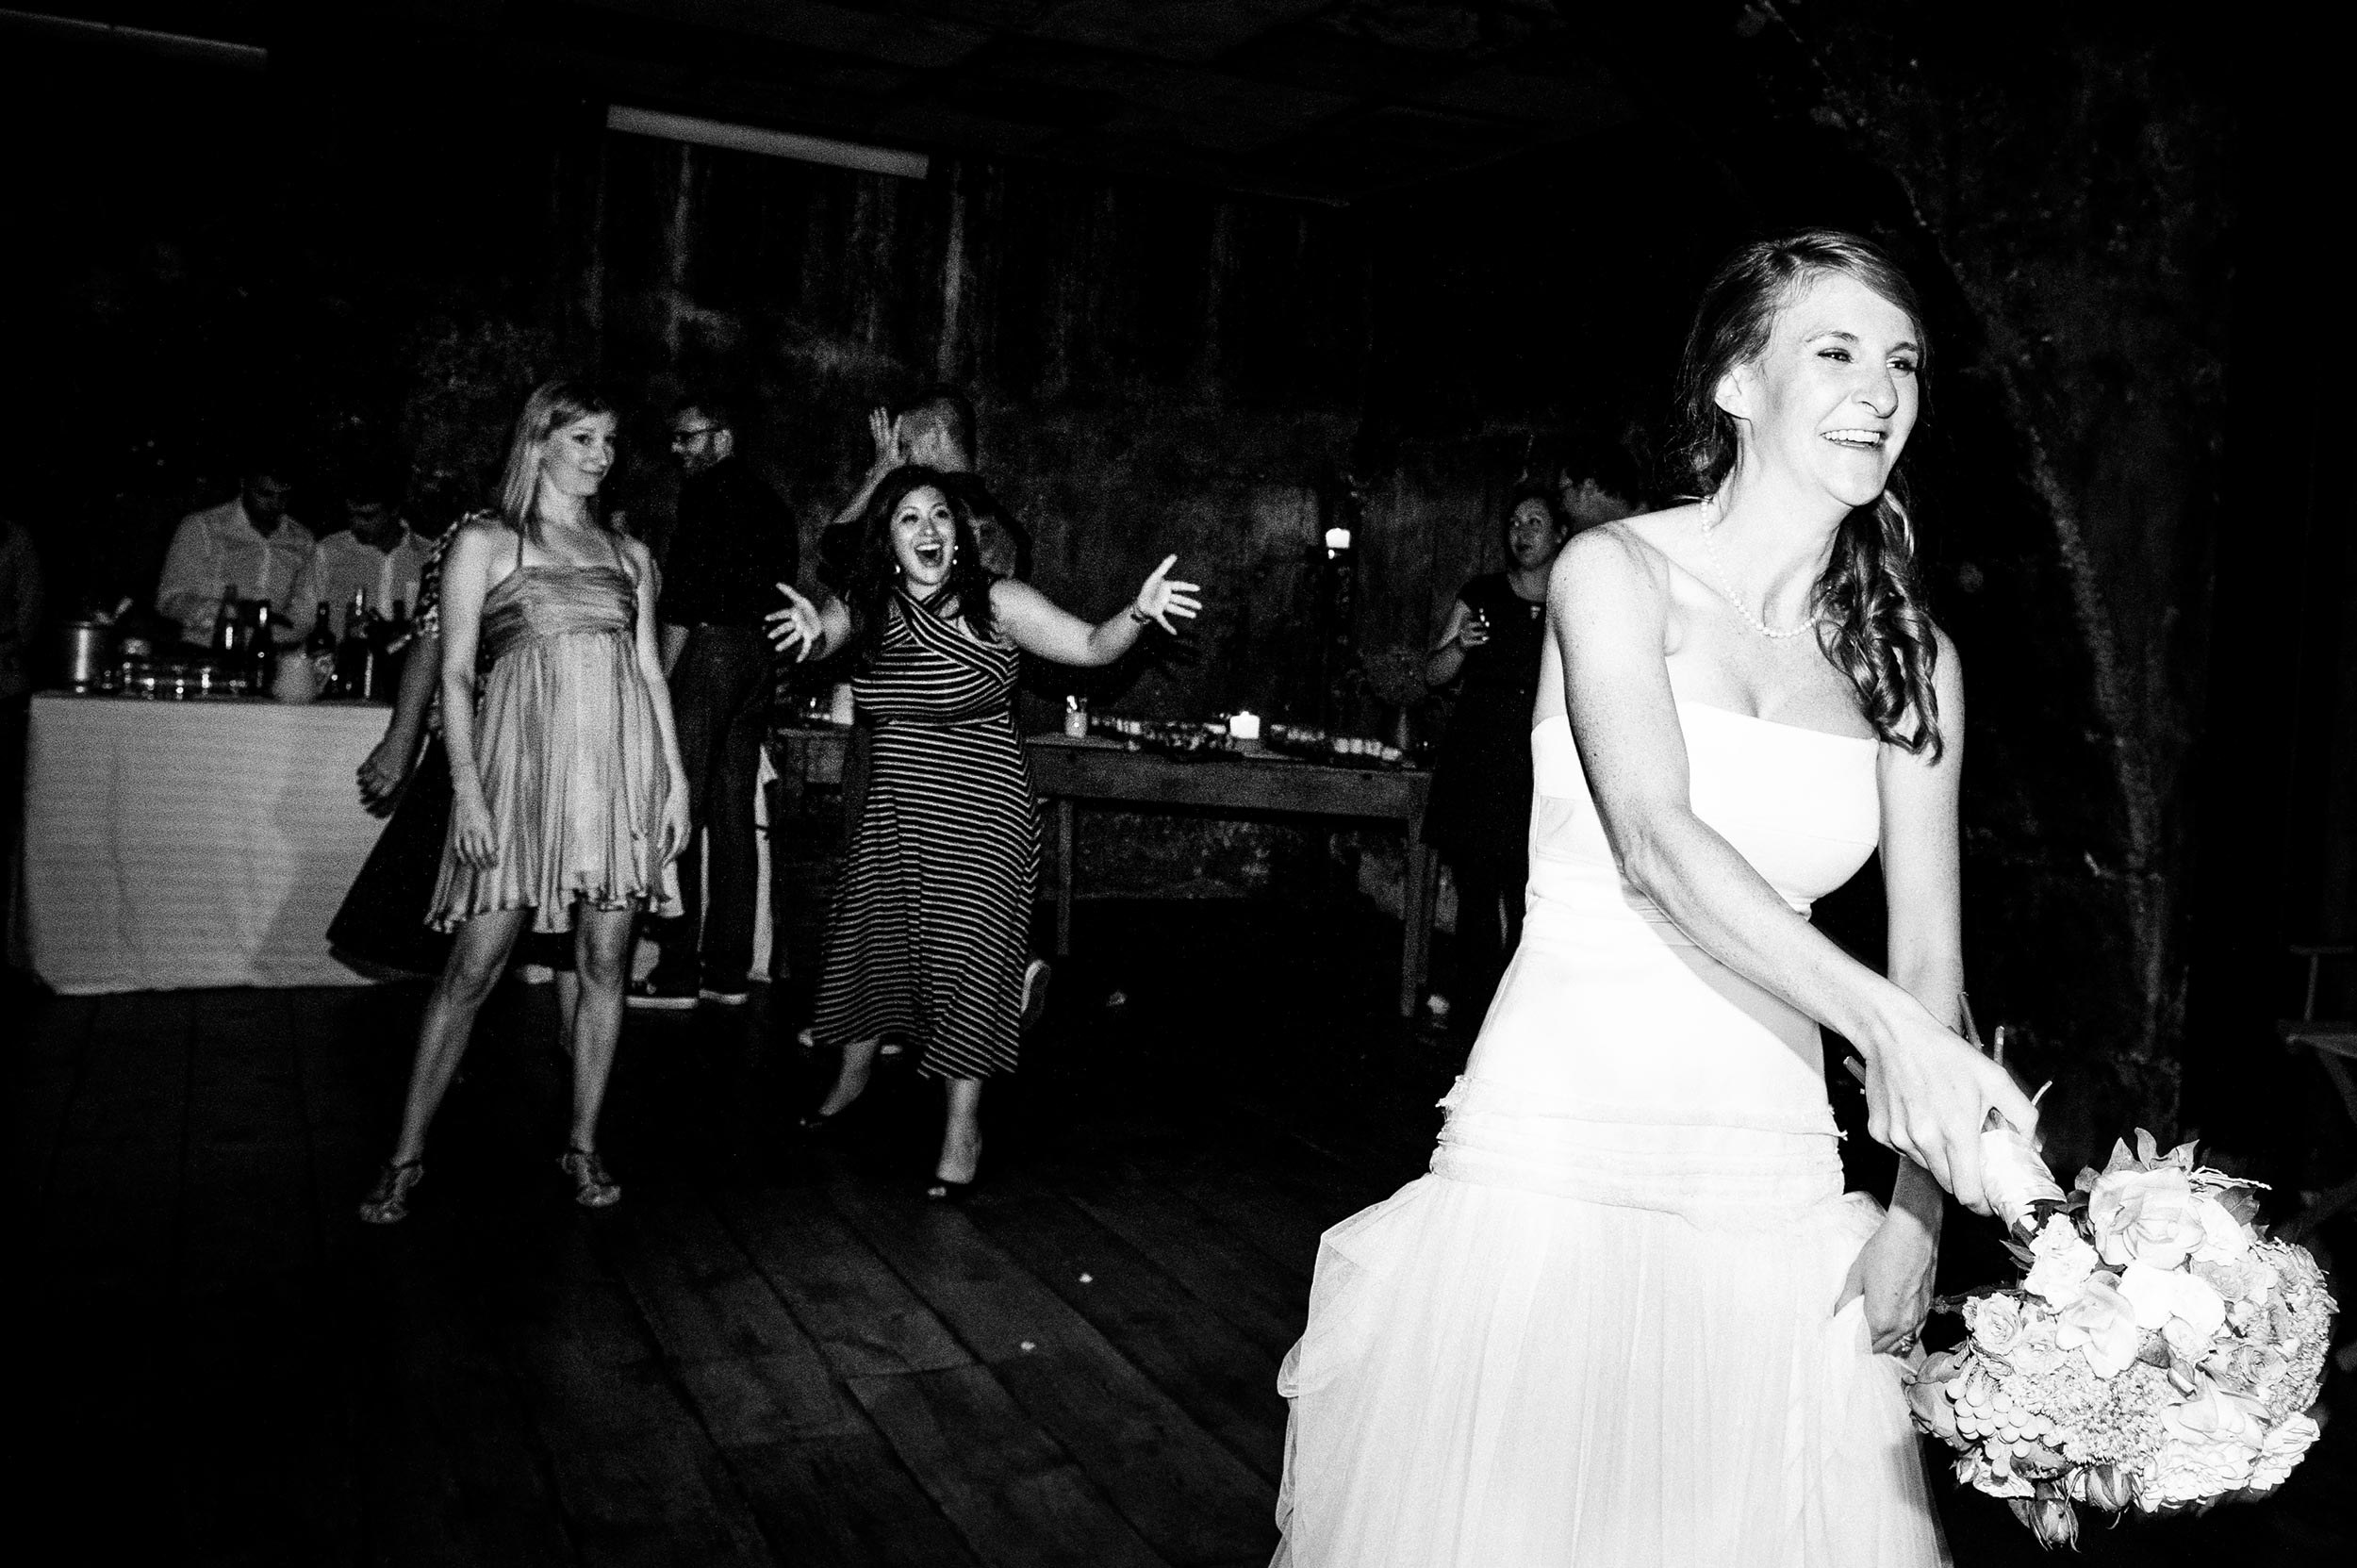 2014-Shelby-Jocelyn-Santo-Stefano-Di-Sessanio-Wedding-Photographer-Italy-Alessandro-Avenali-51.jpg